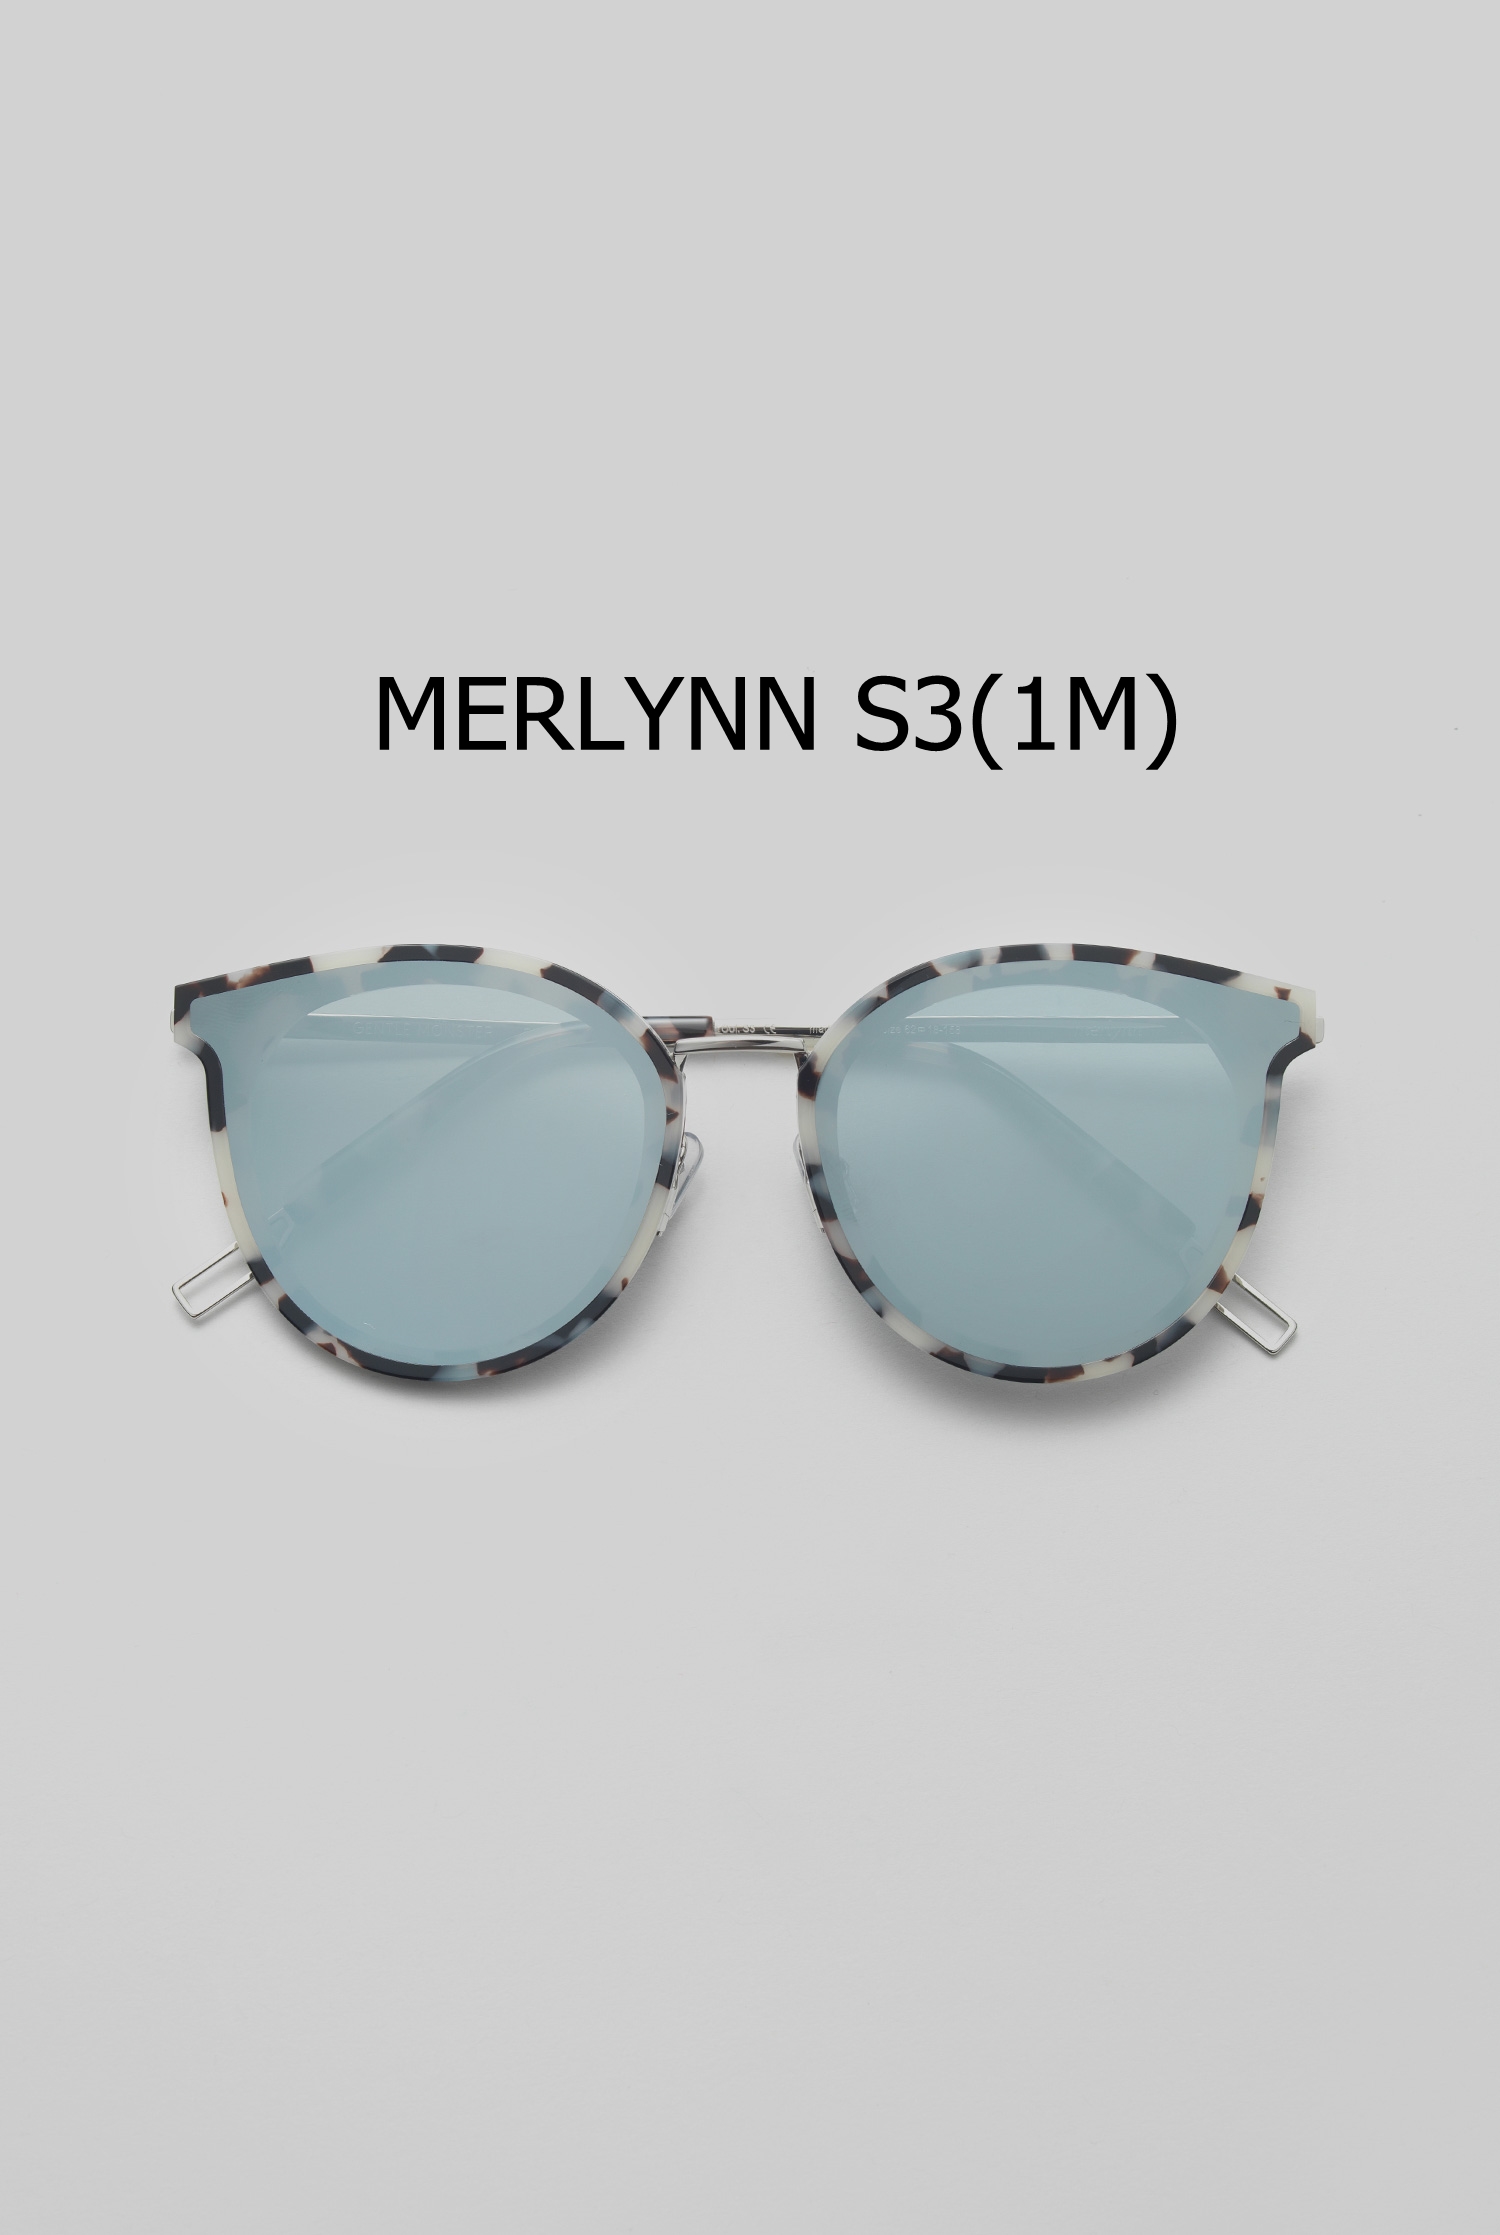 MERLYNN S3(1M)